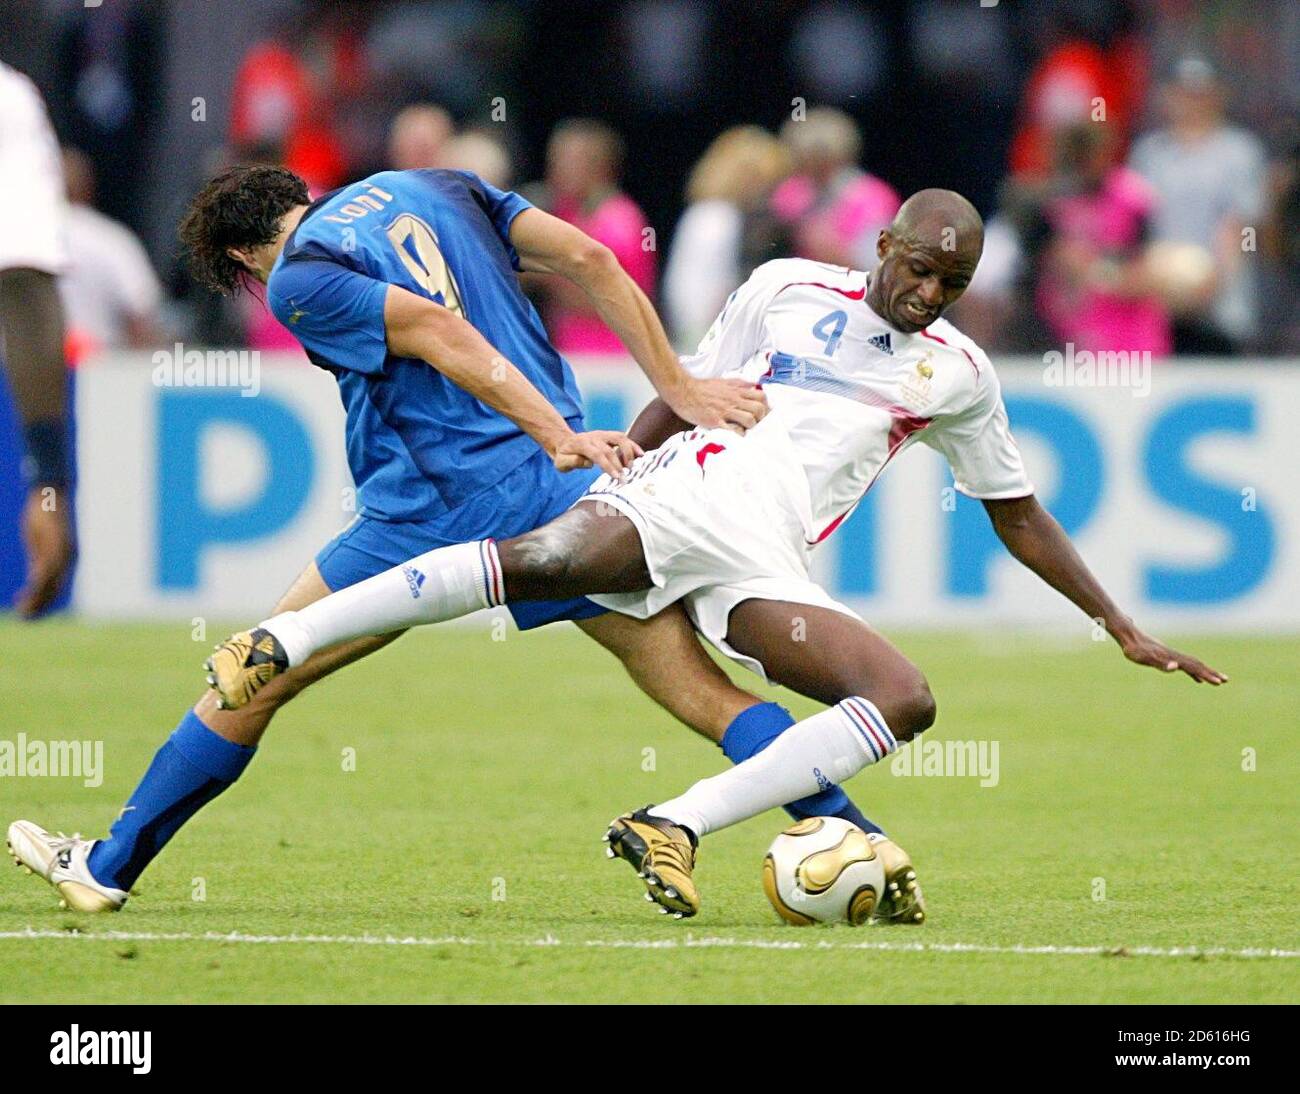 Italy's Luca Toni (l) tackles France's Patrick Vieira (r) Stock Photo